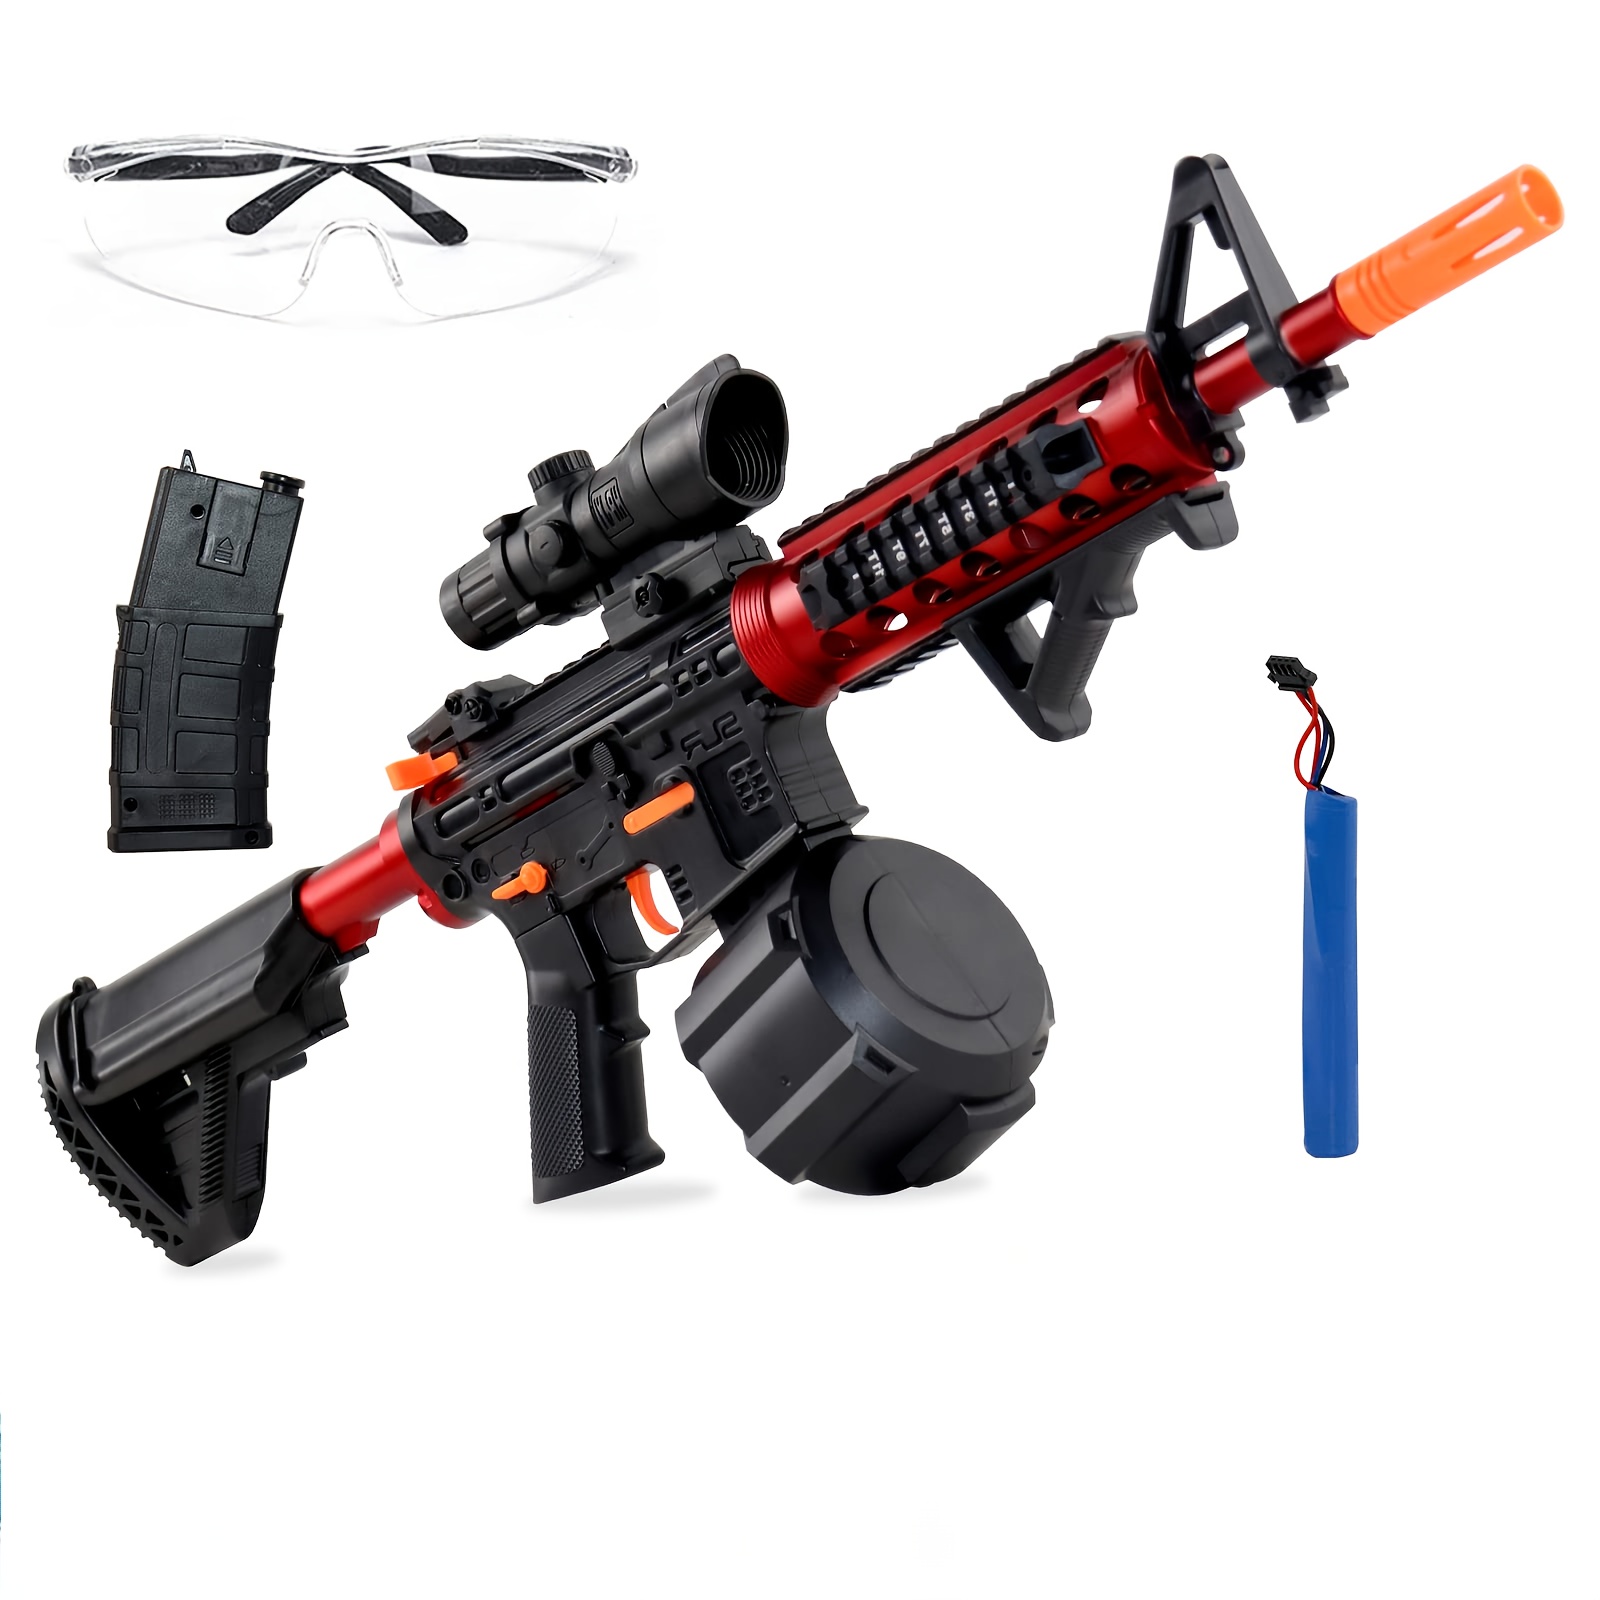 NERF Bullet LASER KIDS ARMY TOY Air Shooter Pistol BB Foam Blaster Dart Gun